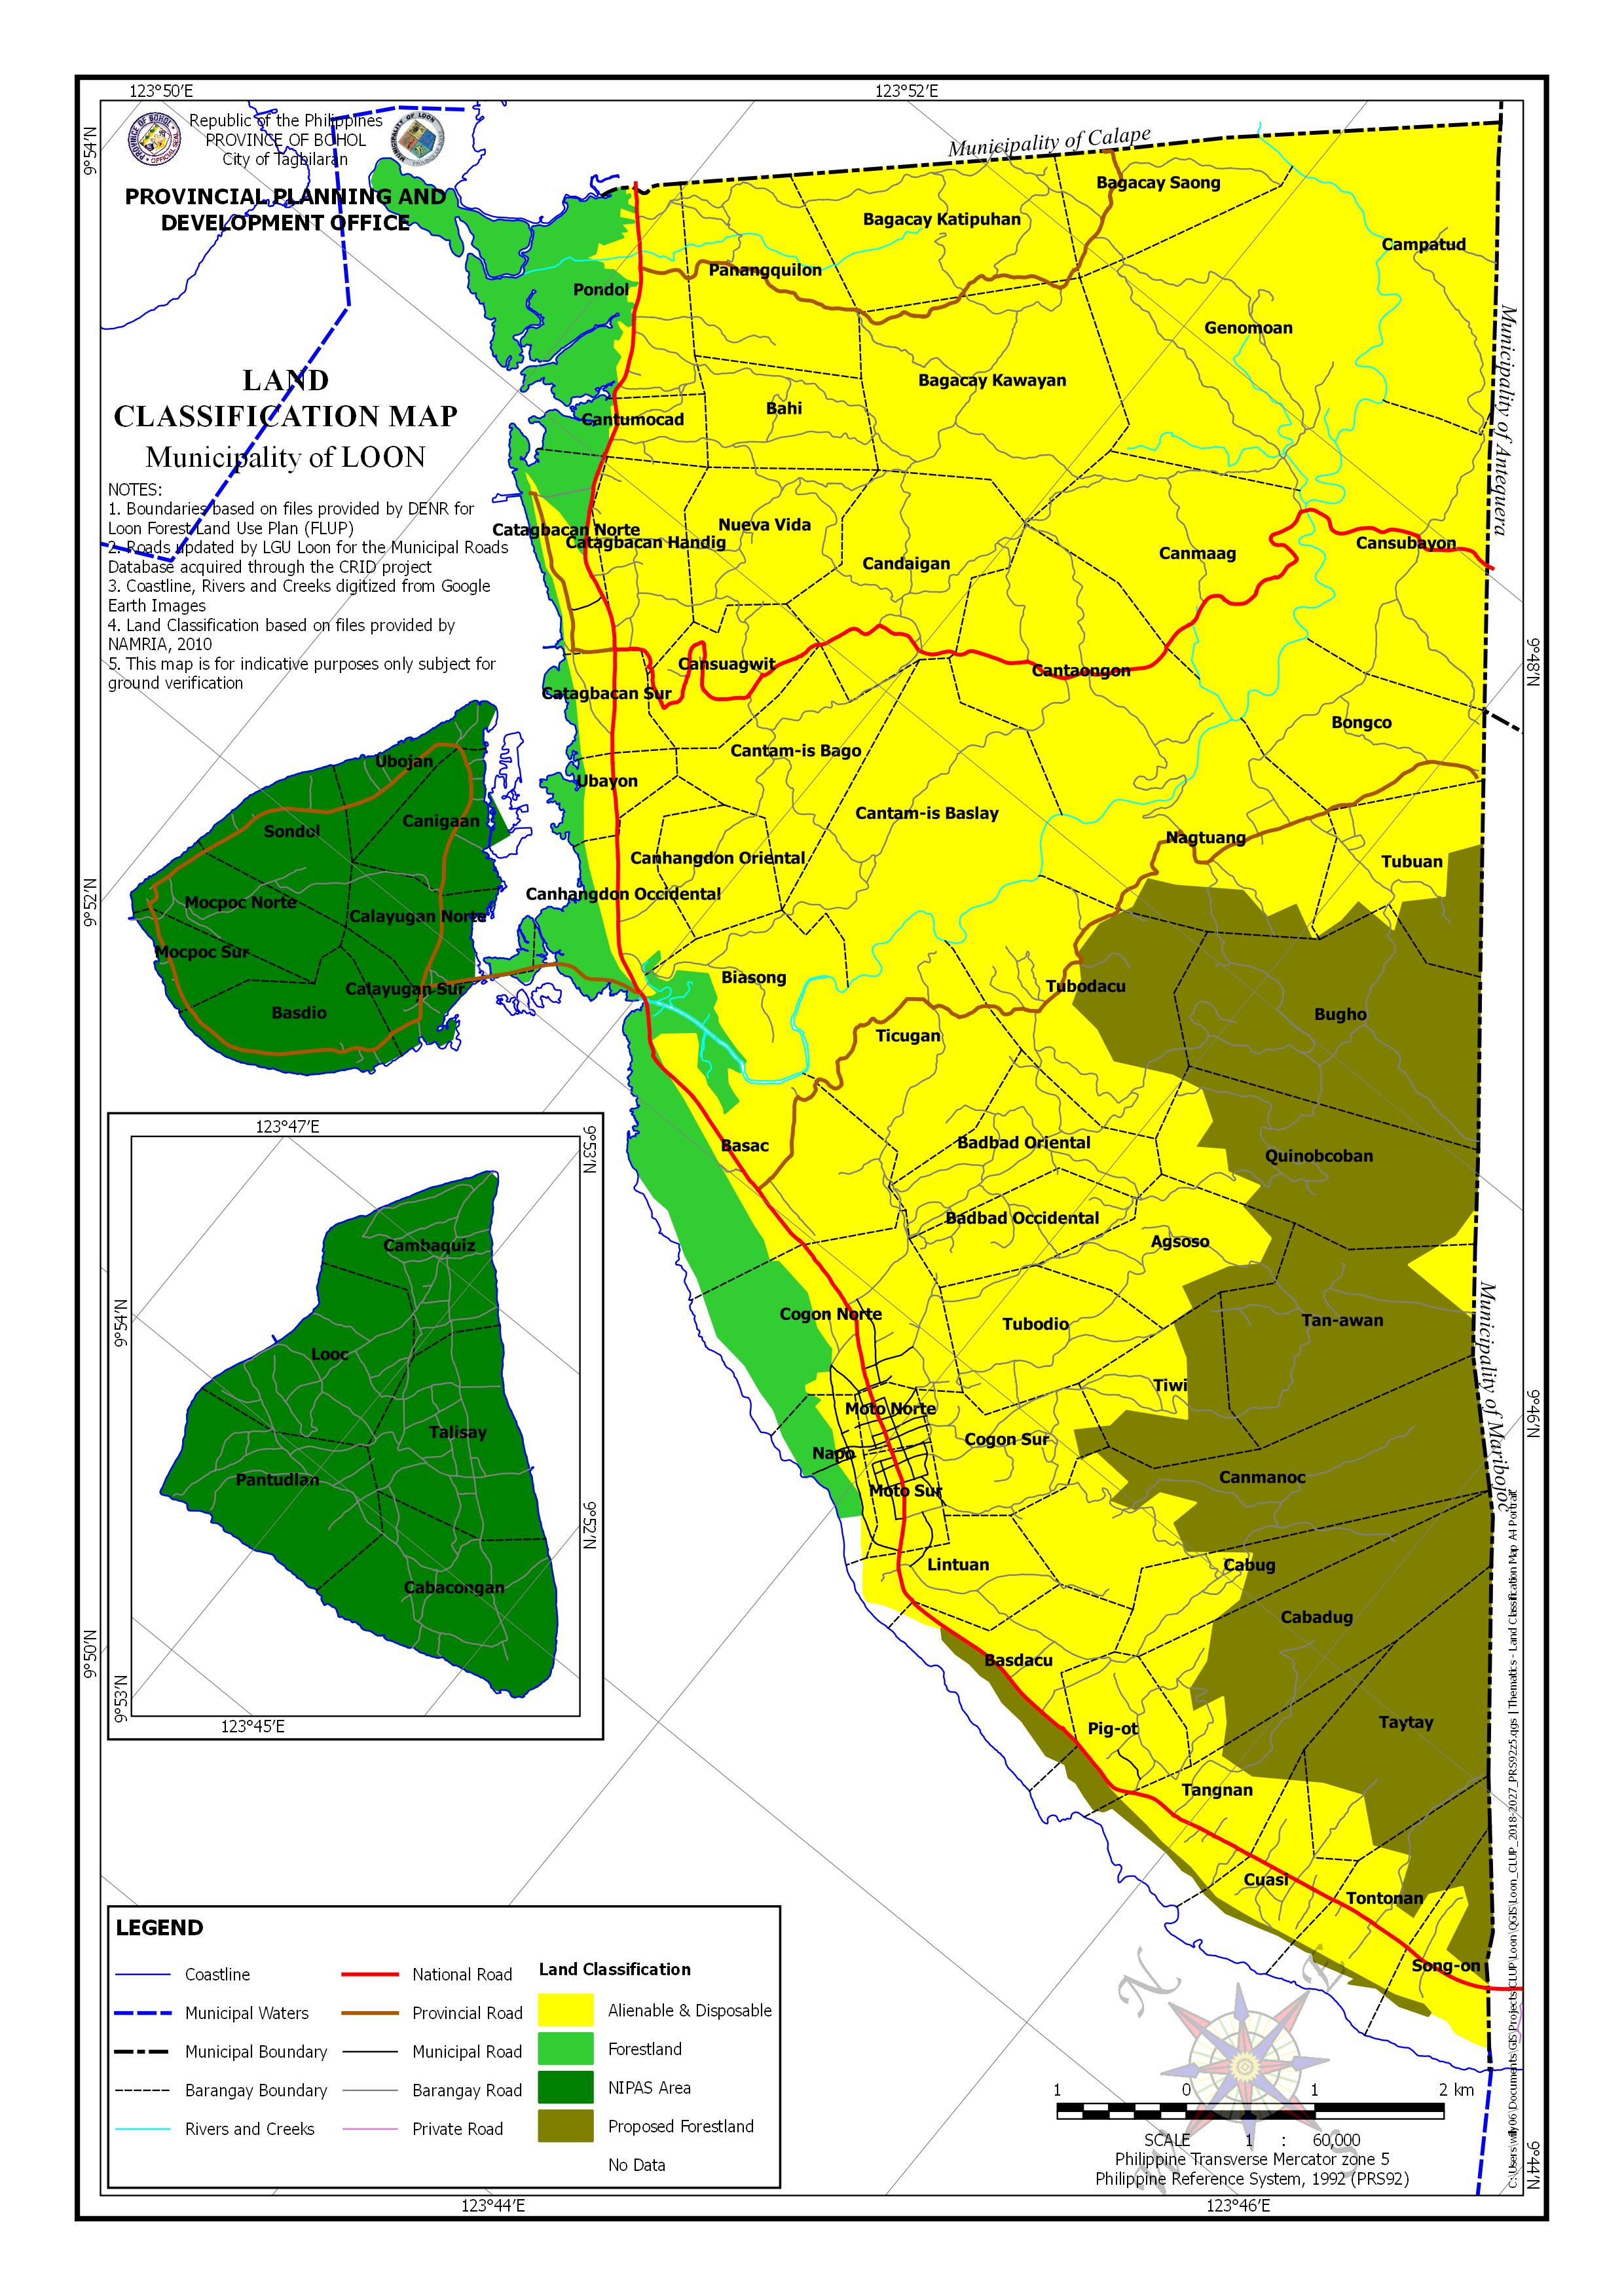 Land Classification